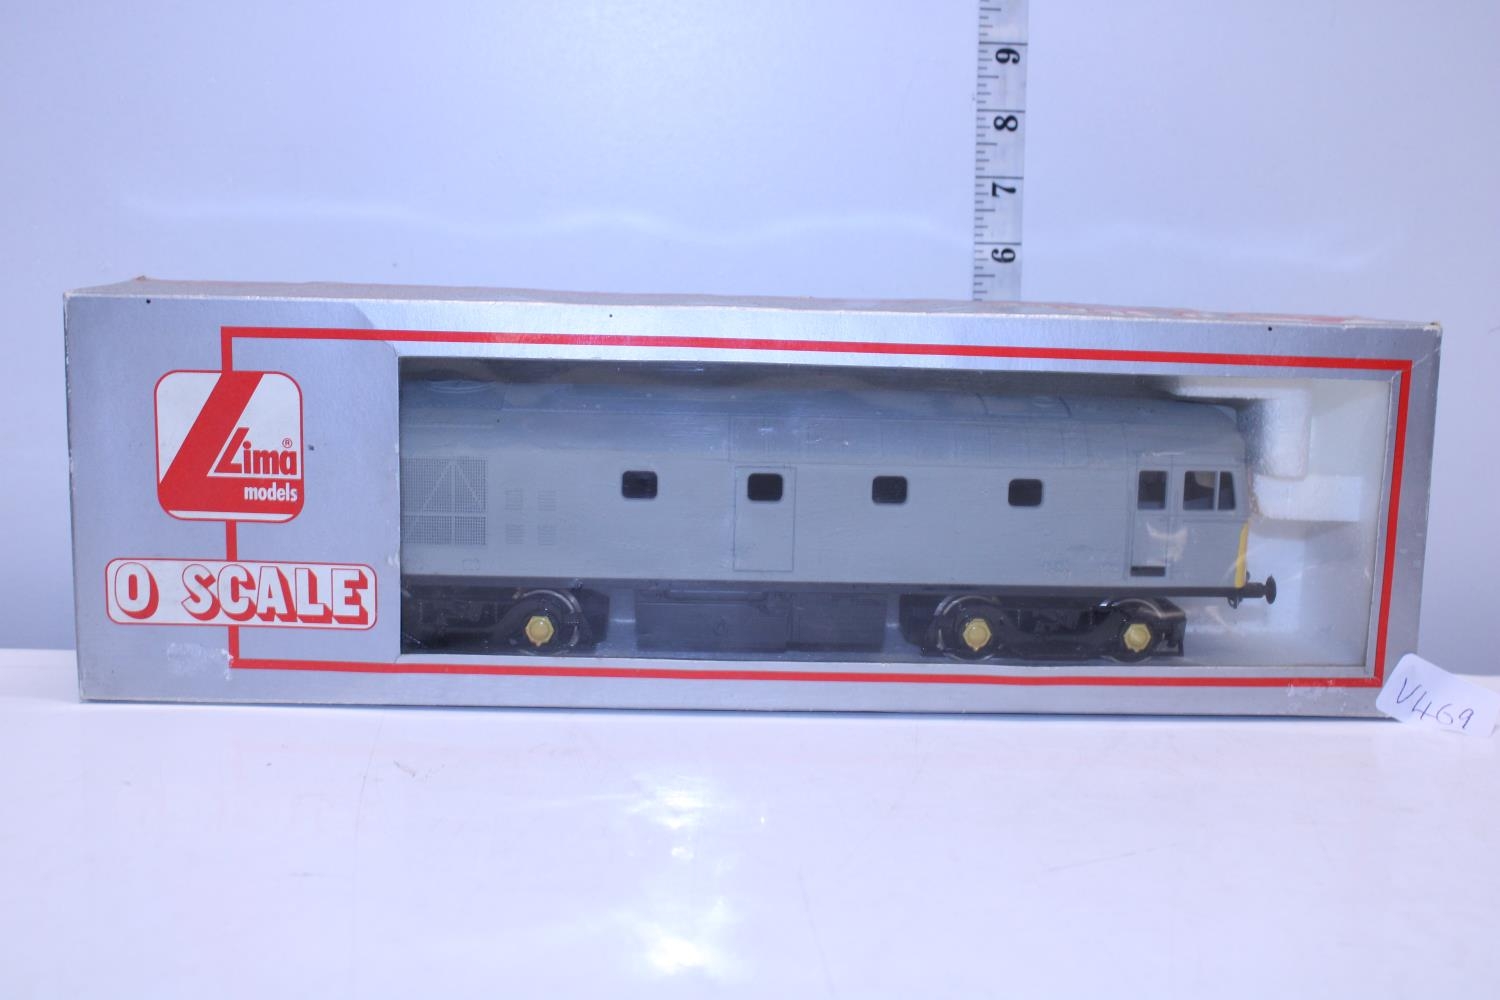 A boxed Lima 0 scale model train